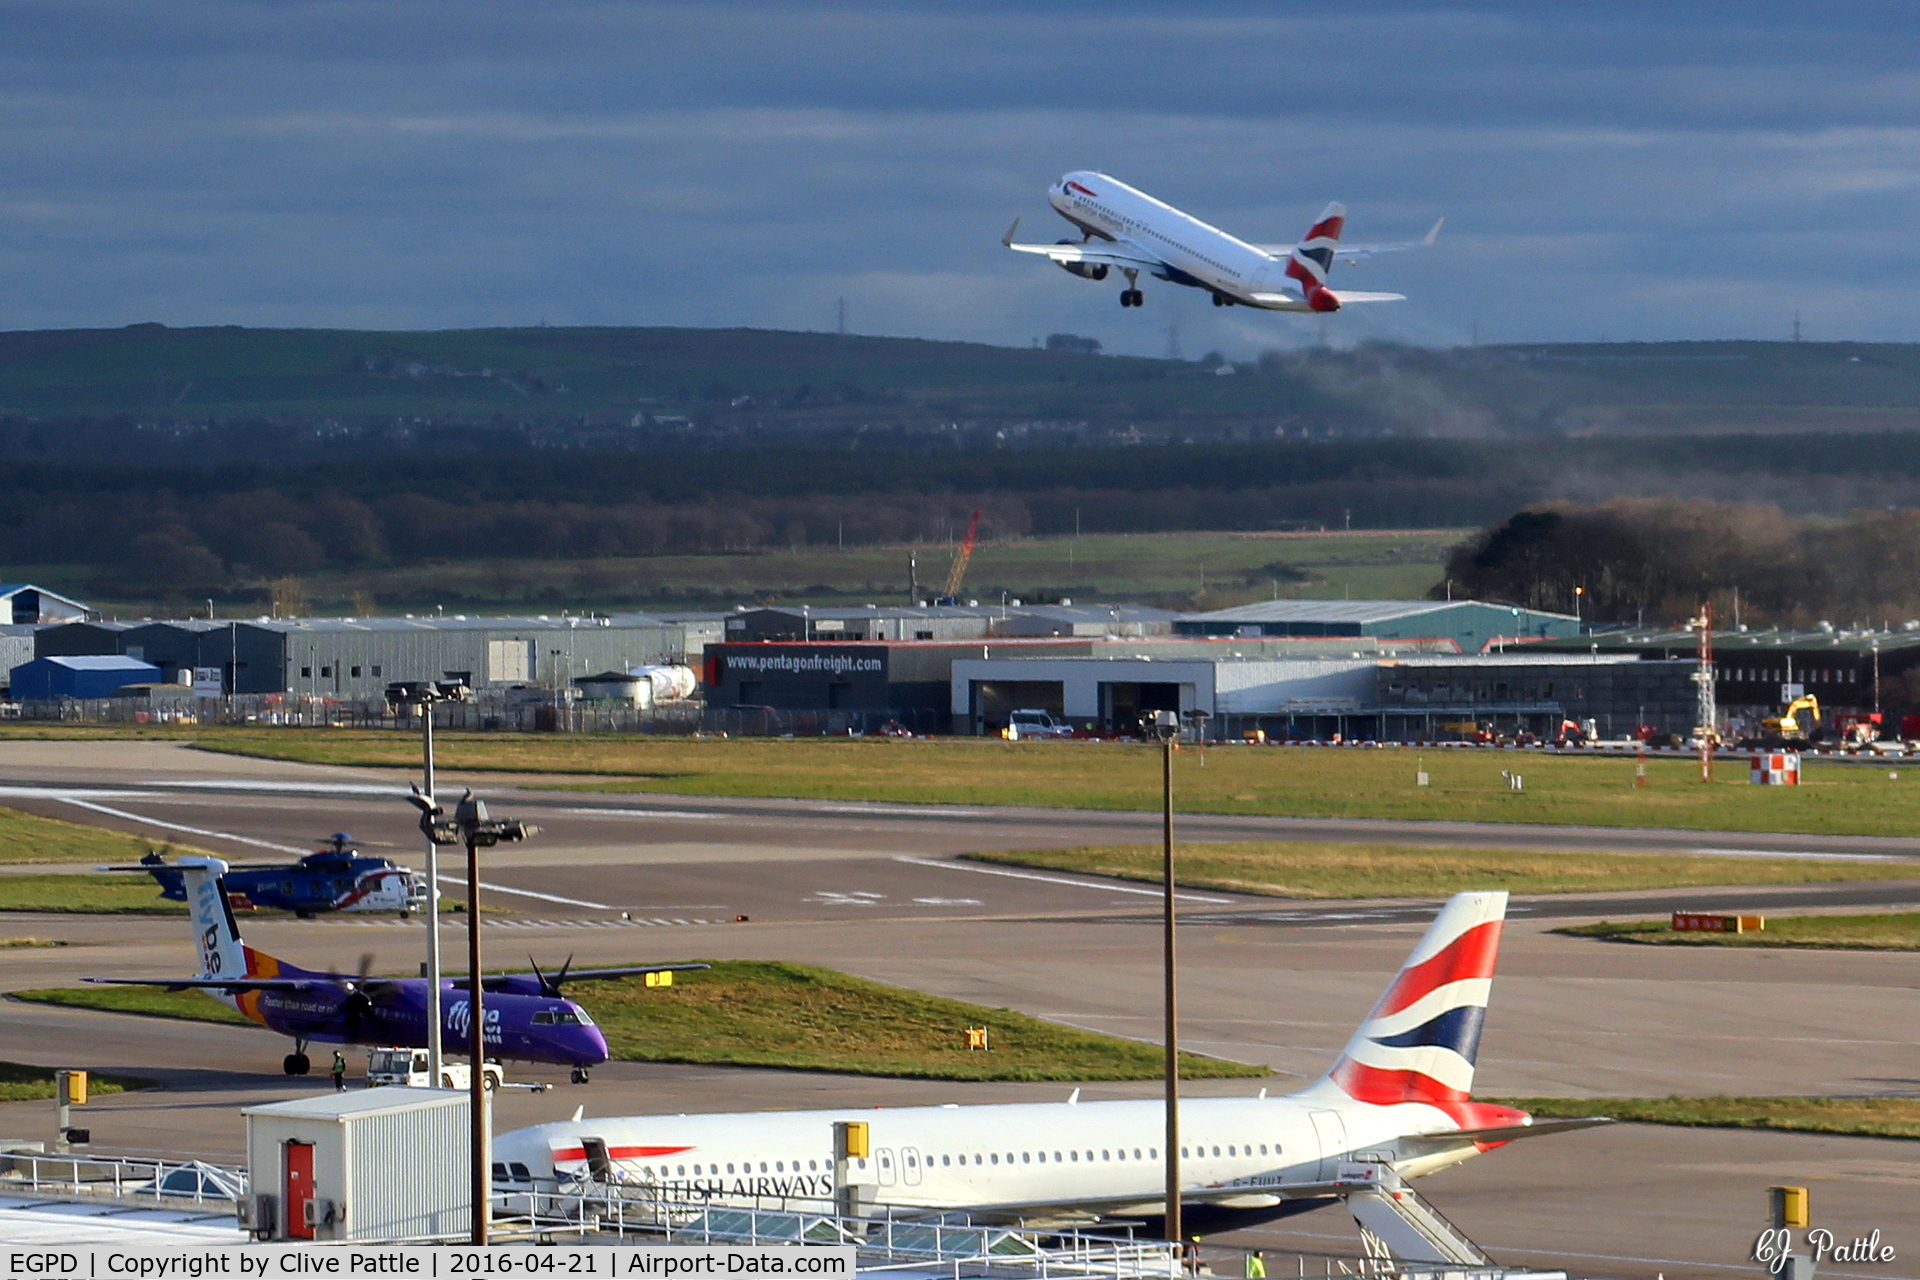 Aberdeen Airport, Aberdeen, Scotland United Kingdom (EGPD) - Aberdeen EGPD looking northwards